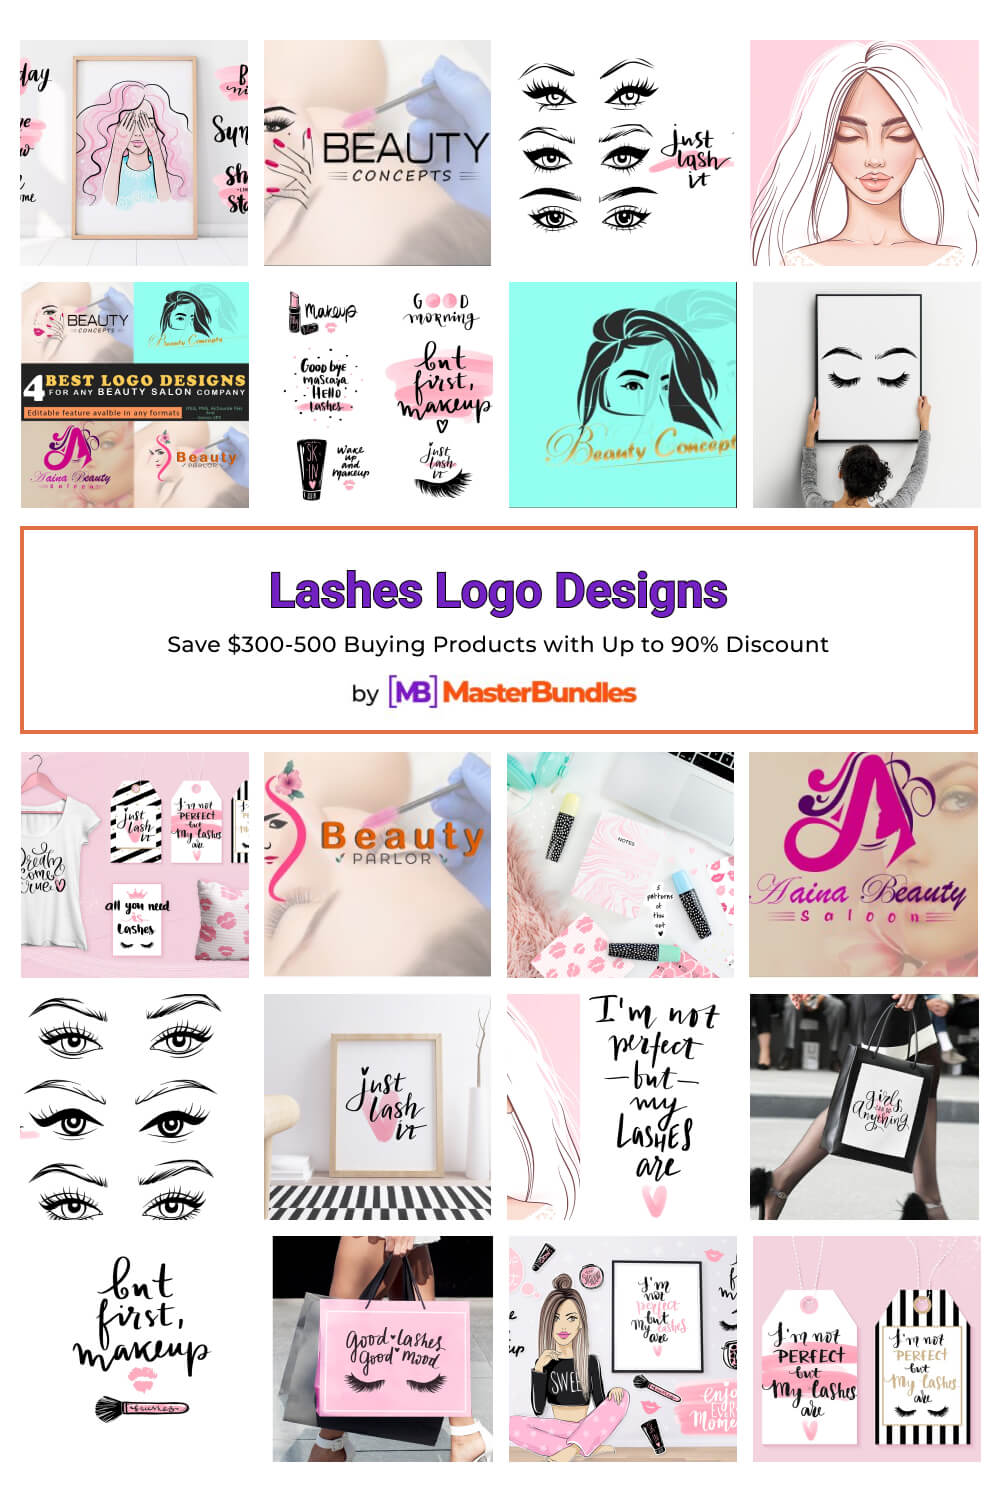 lashes logo designs pinterest image.